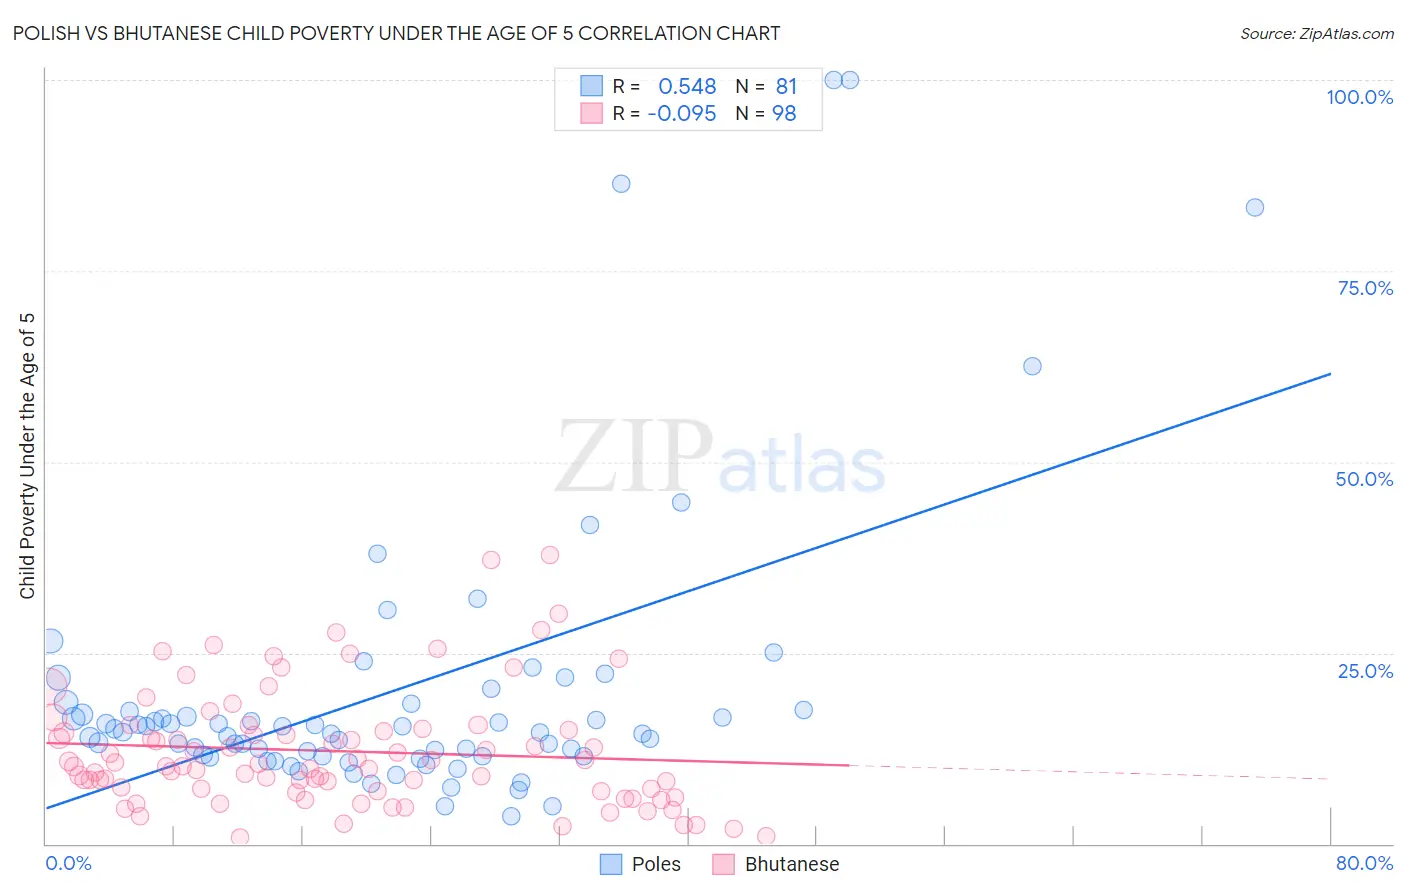 Polish vs Bhutanese Child Poverty Under the Age of 5